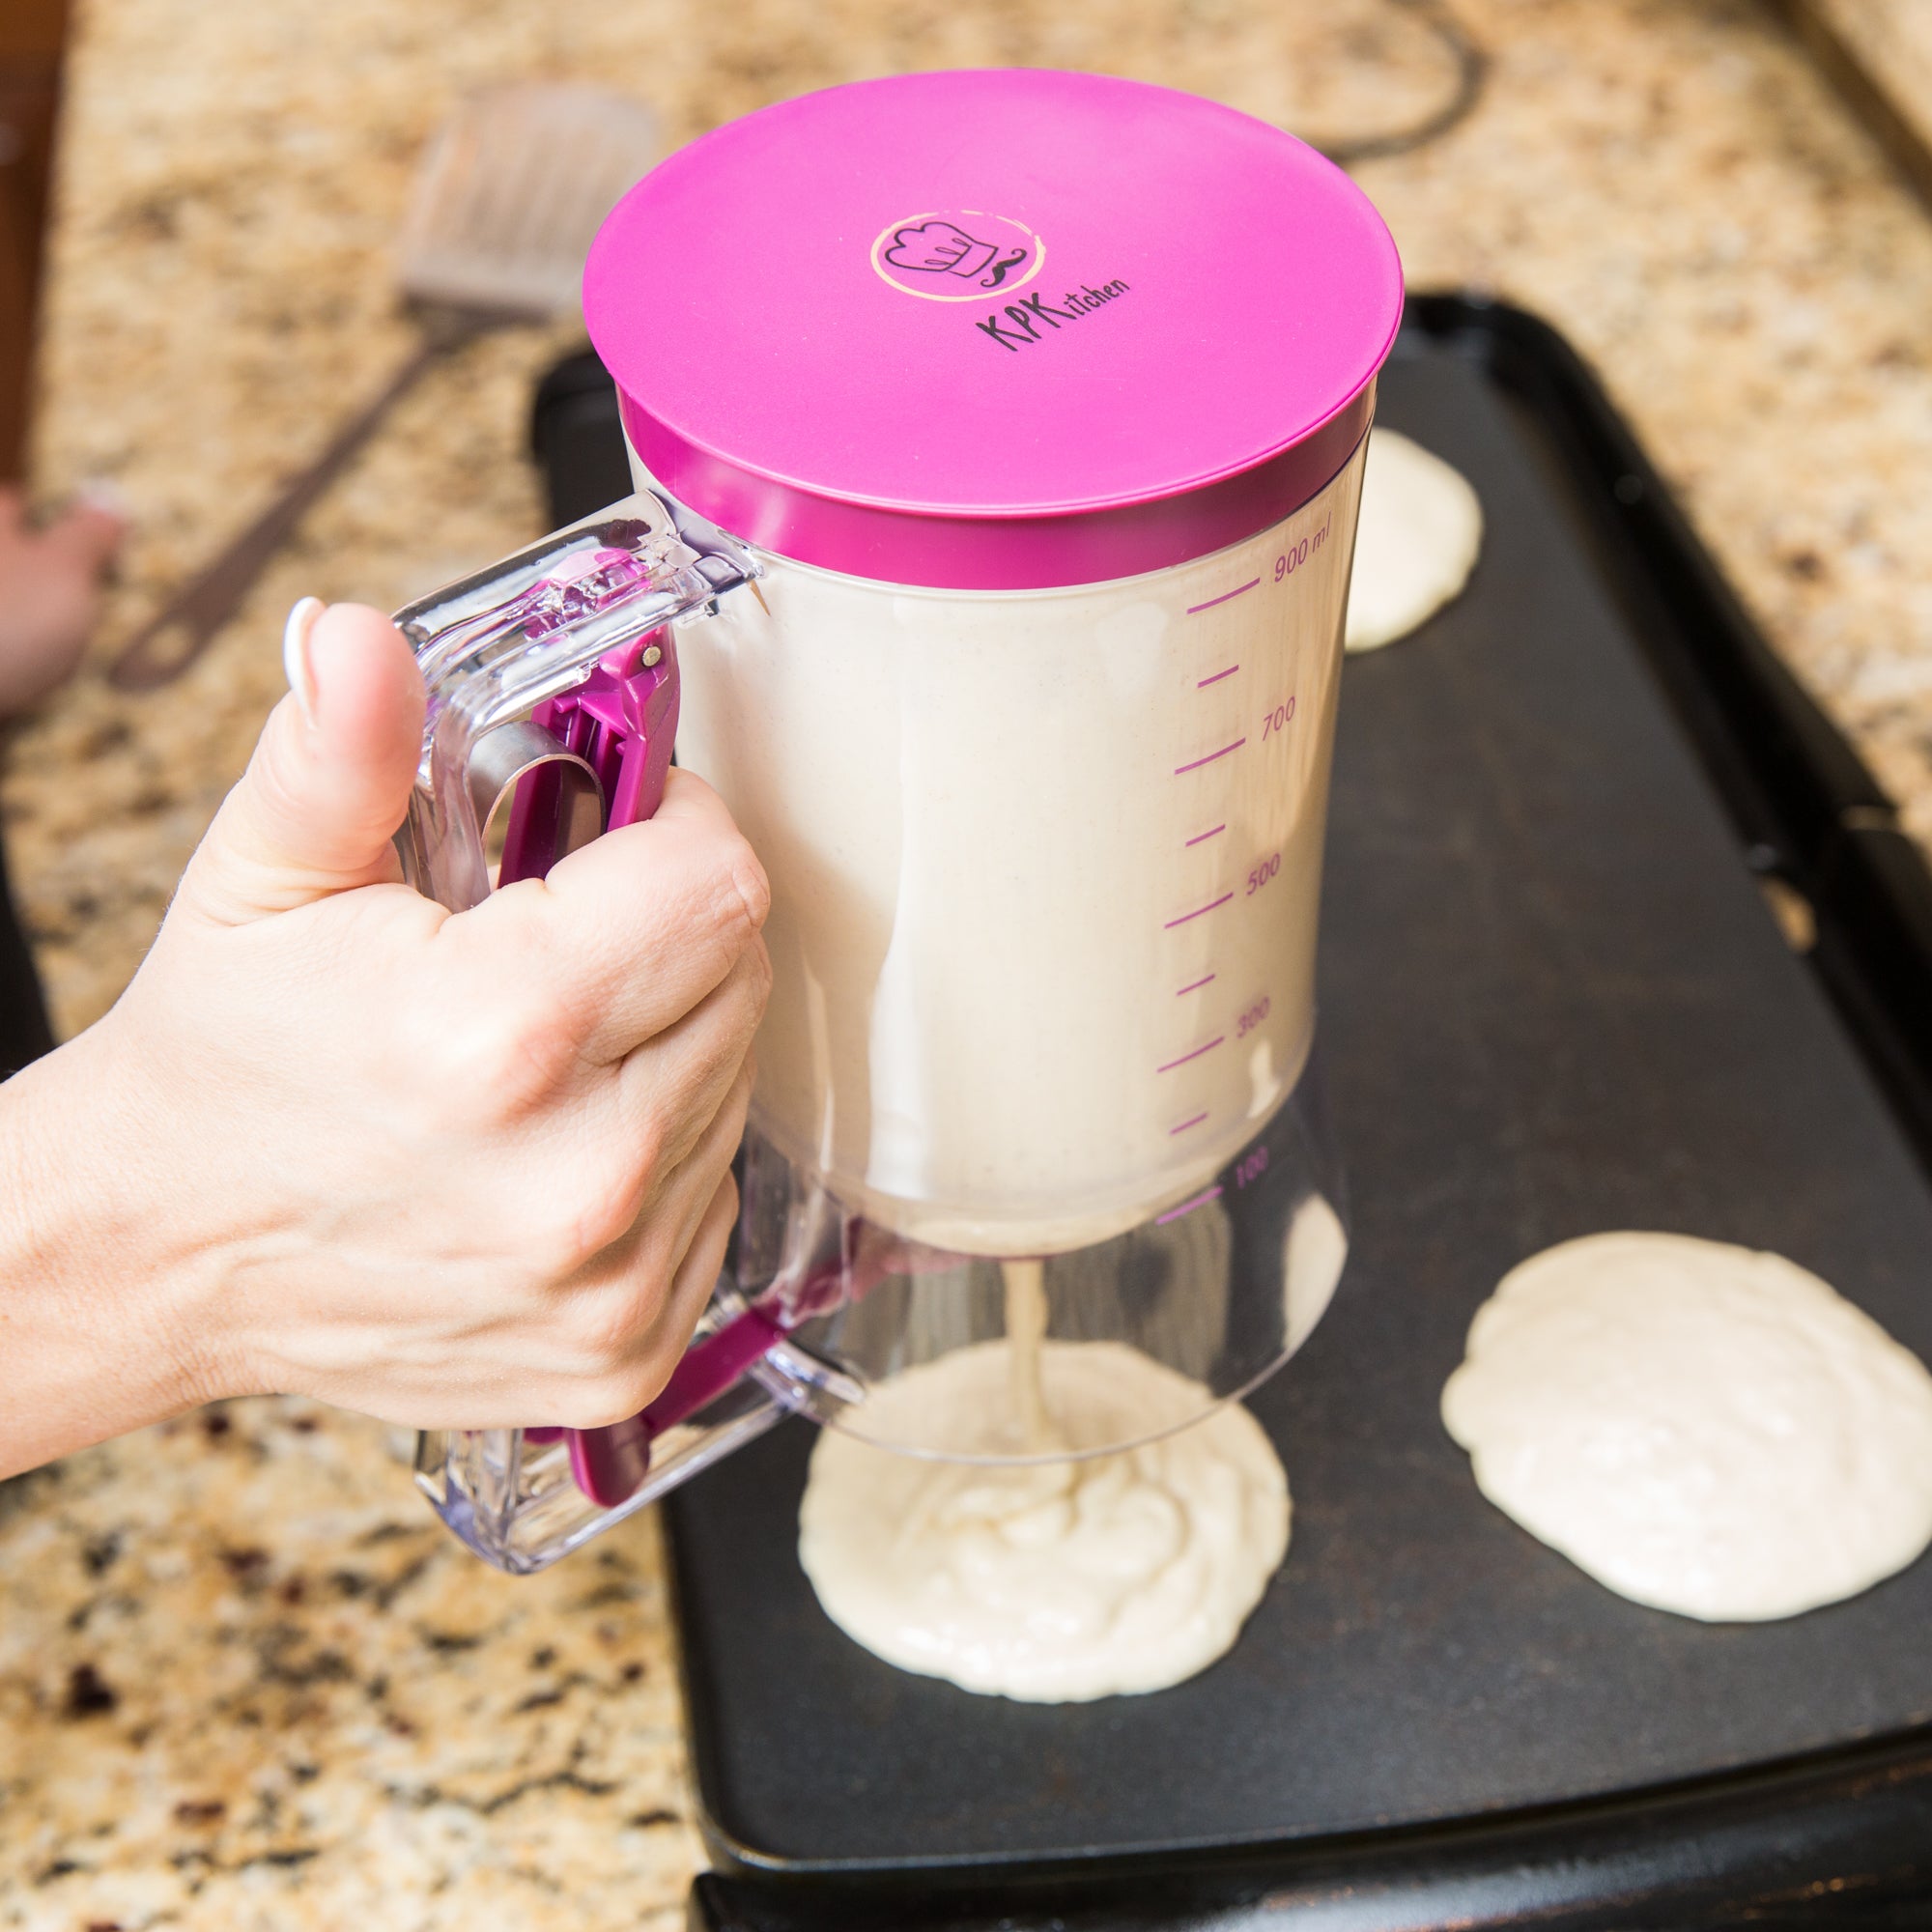 Top 5 - Best Pancake Batter Dispensers of 2022 